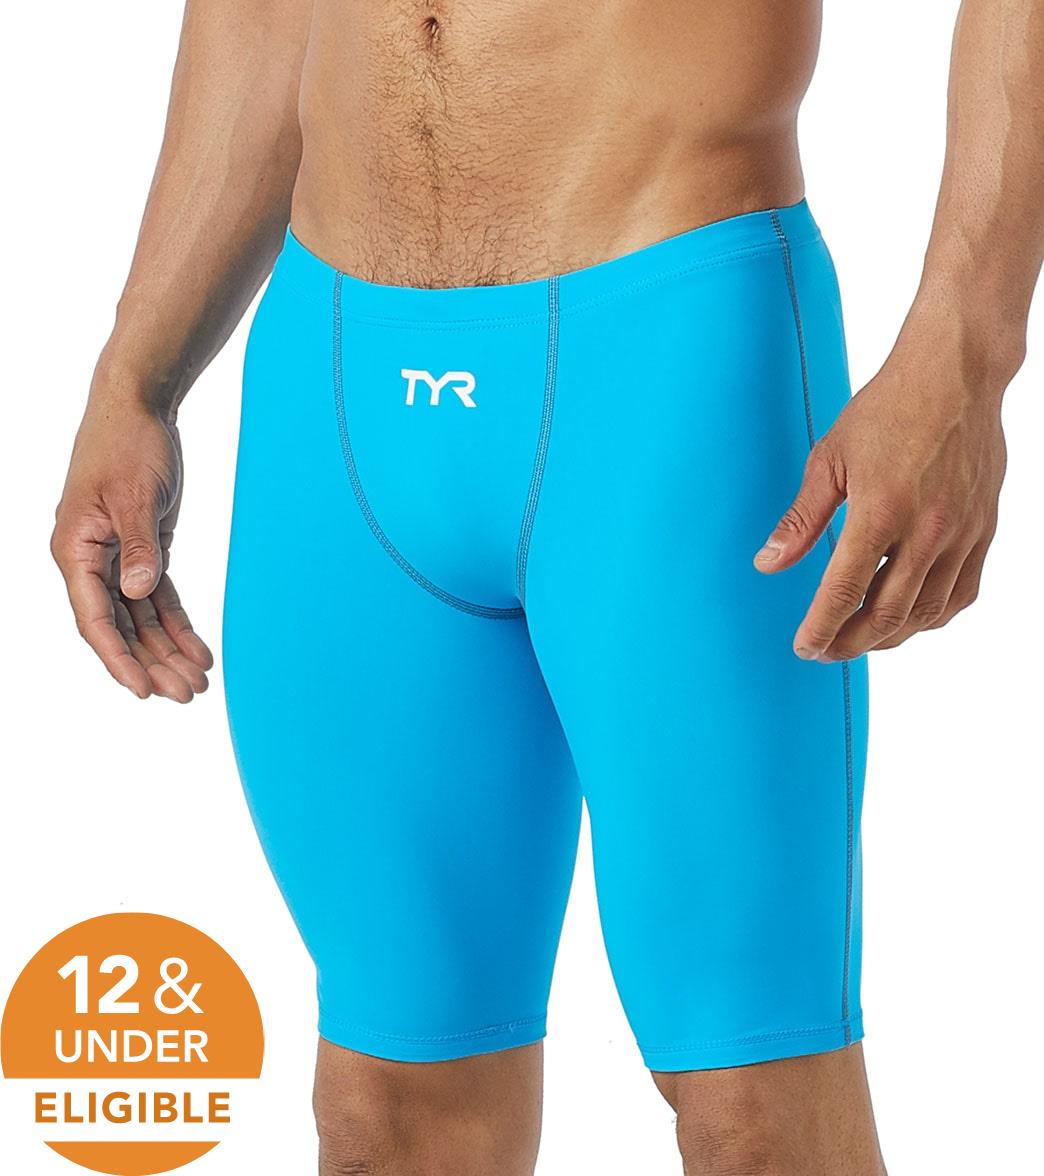 TYR Men's Thresher Short Jammer Tech Suit Swimsuit - Blue/Grey 18 - Swimoutlet.com